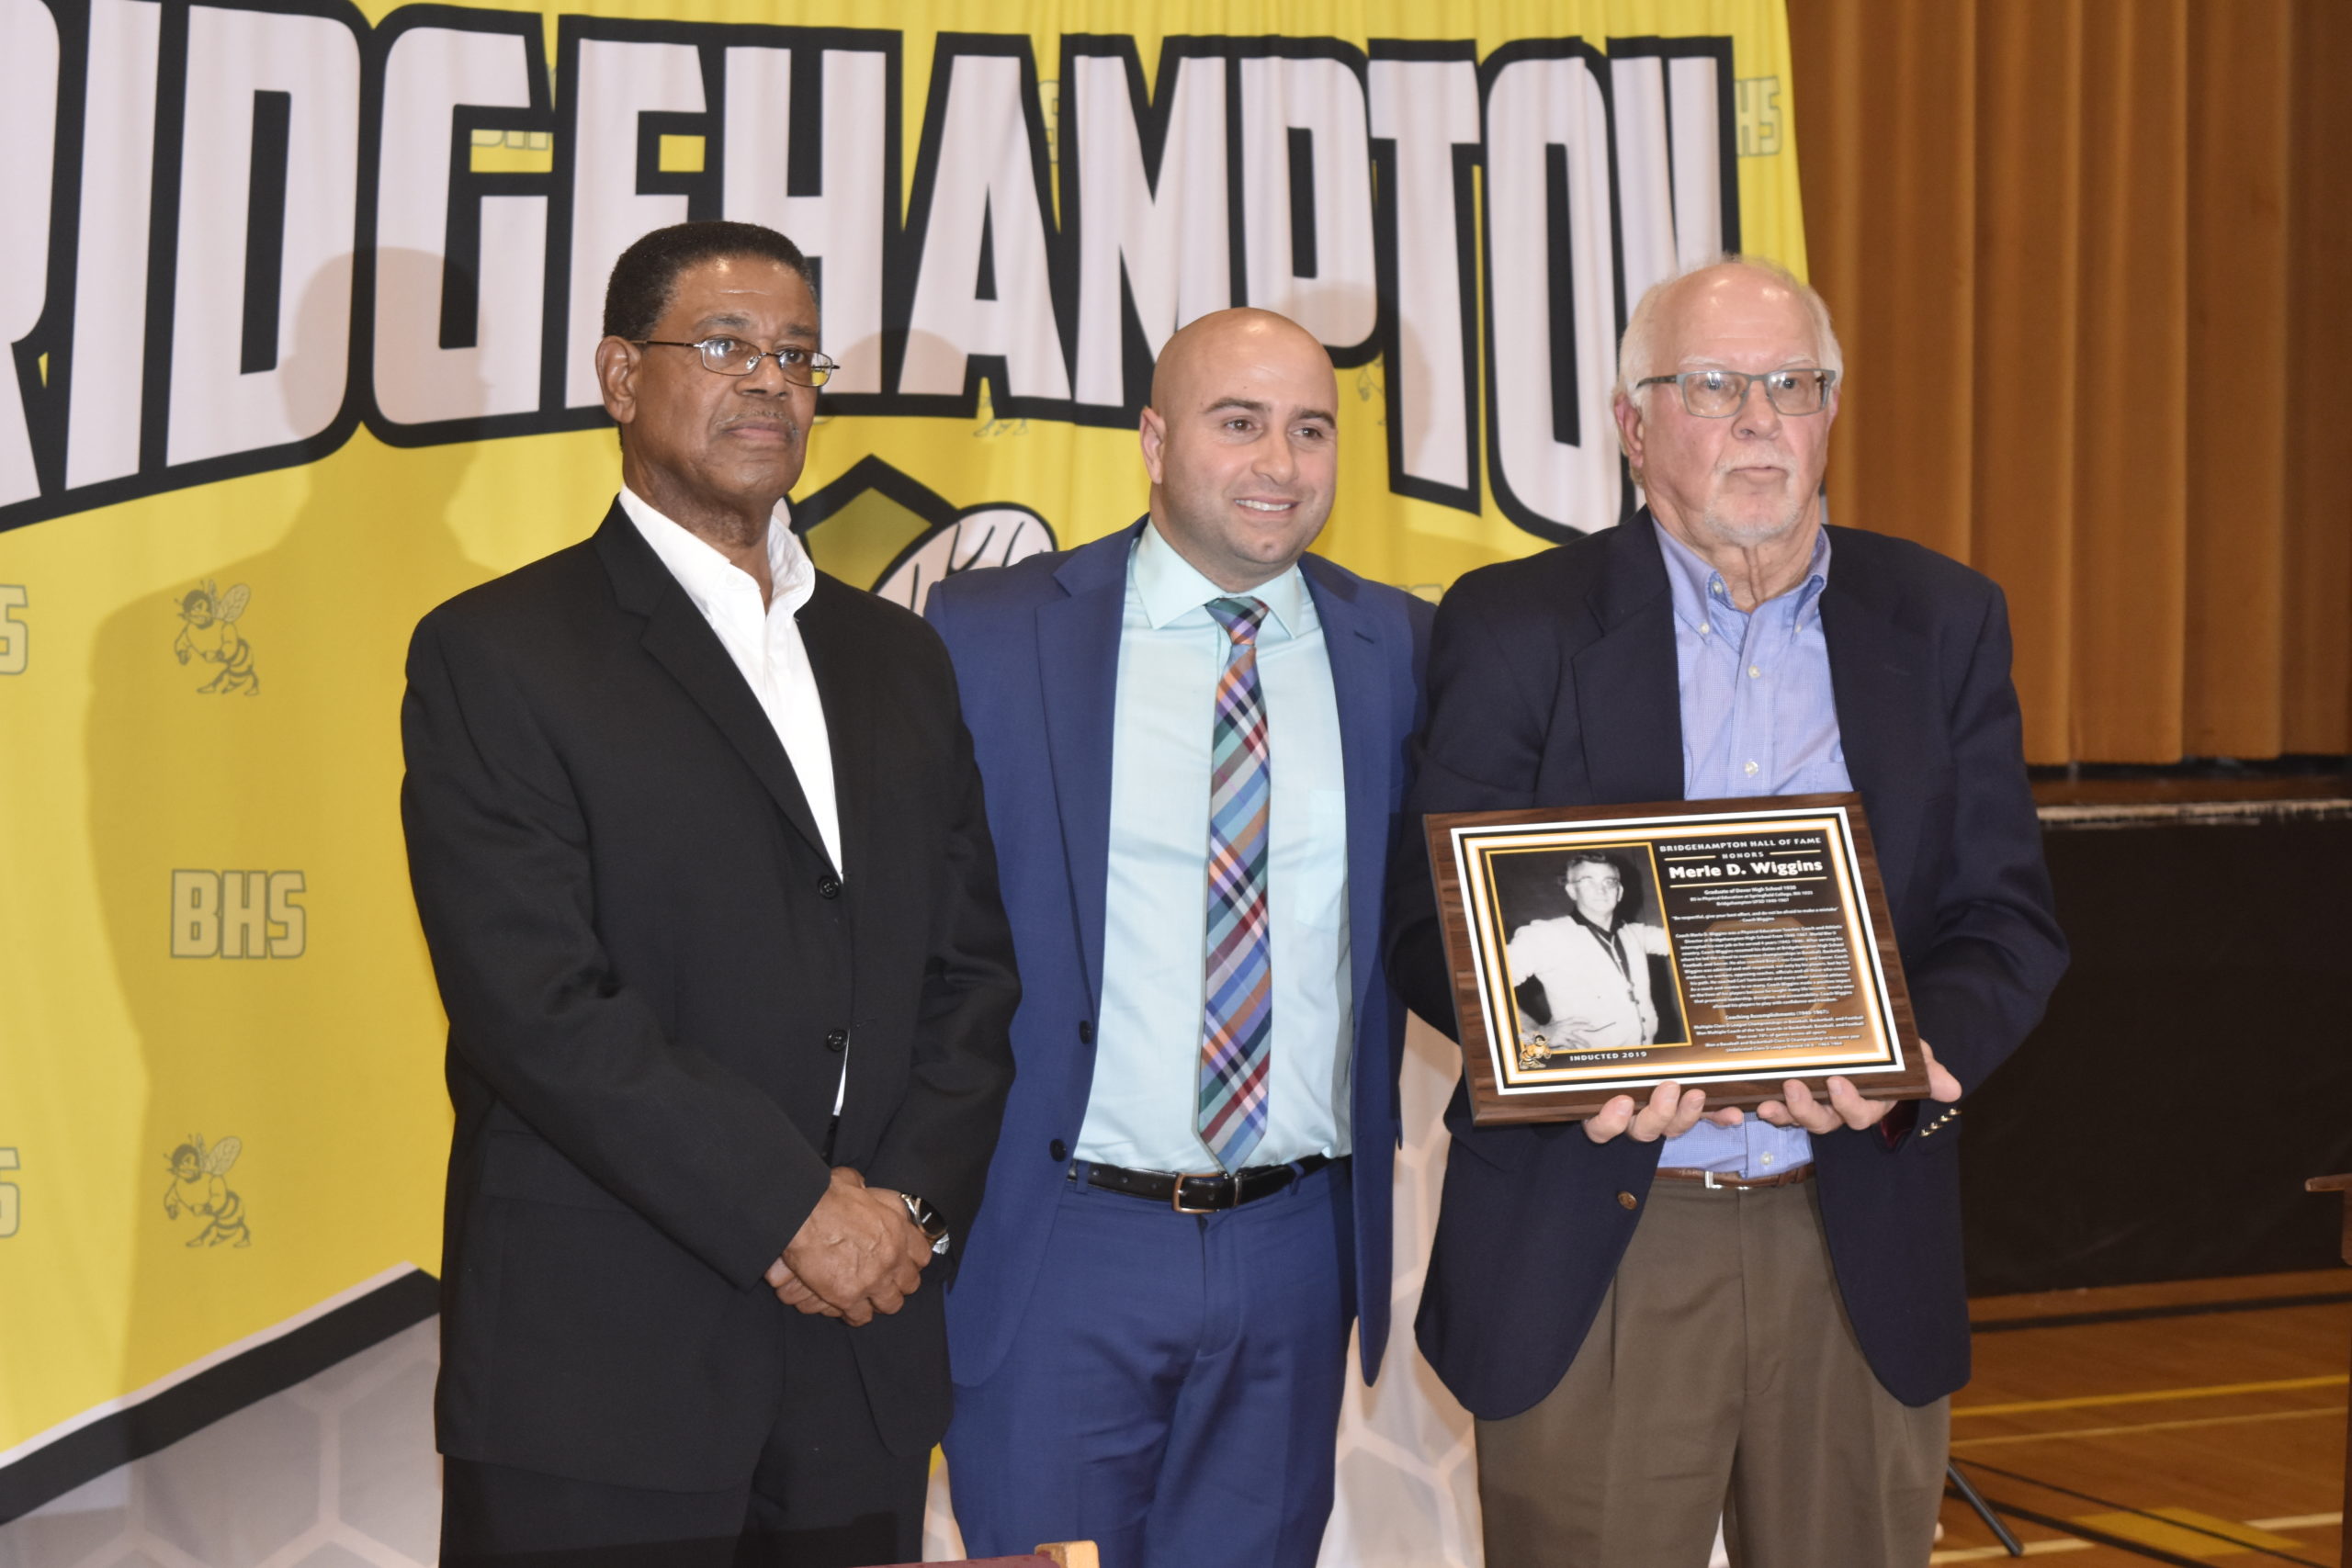 Ray Charlton, from left, with Michael DeRosa and Wayne Rana. Charlton and Rana spoke on behalf of the late Merle D. Wiggin.